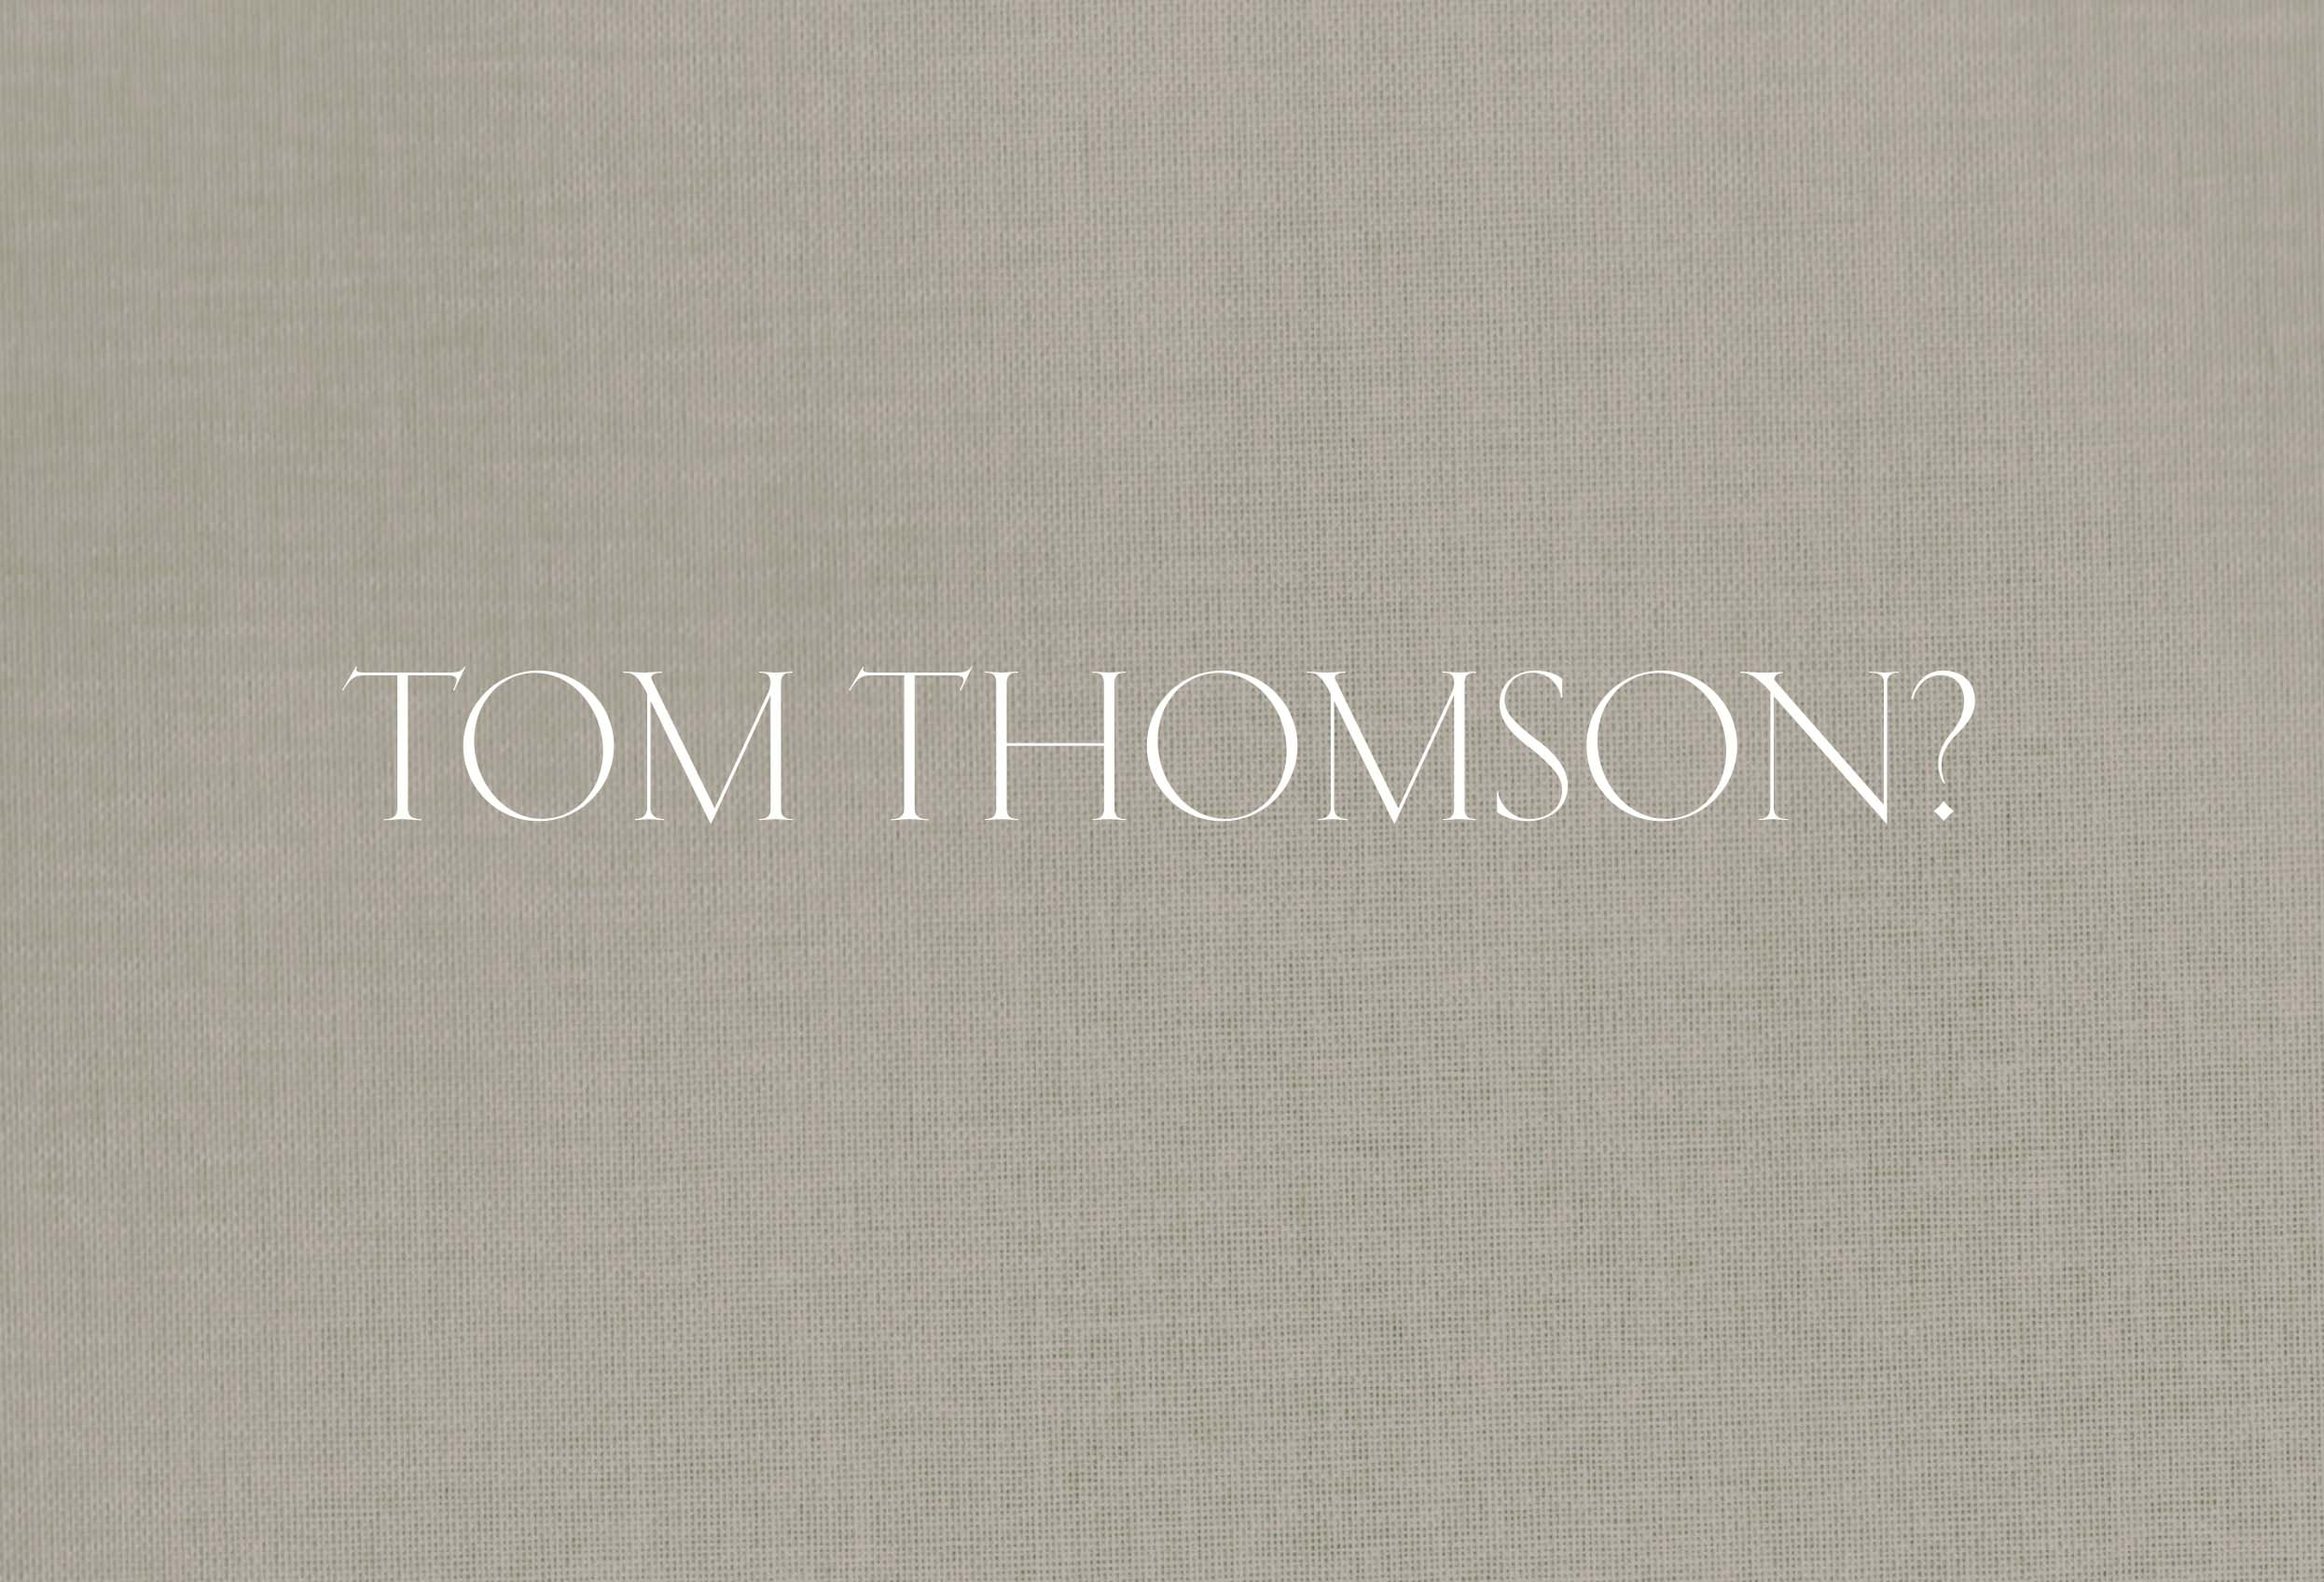 Tom Thomson? Publication cover